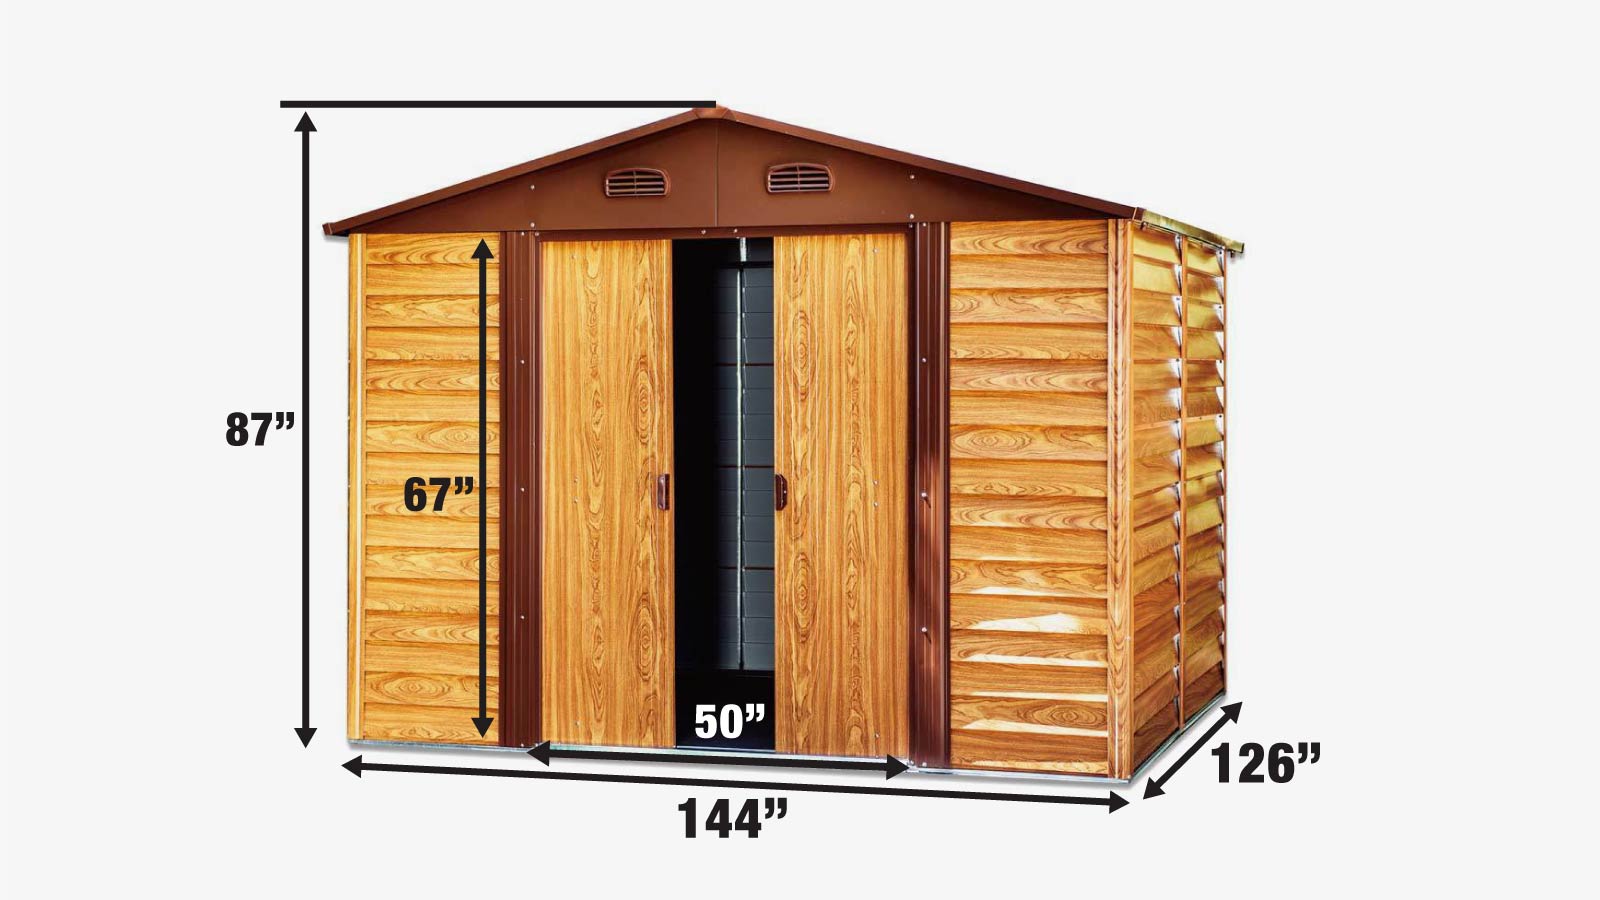 TMG Industrial 11’ x 12’ Wood-Grain Galvanized Apex Roof Metal Shed, 50” Sliding Door, 29 GA Corrugated Metal, 67” Edge Height, TMG-MS1112-specifications-image